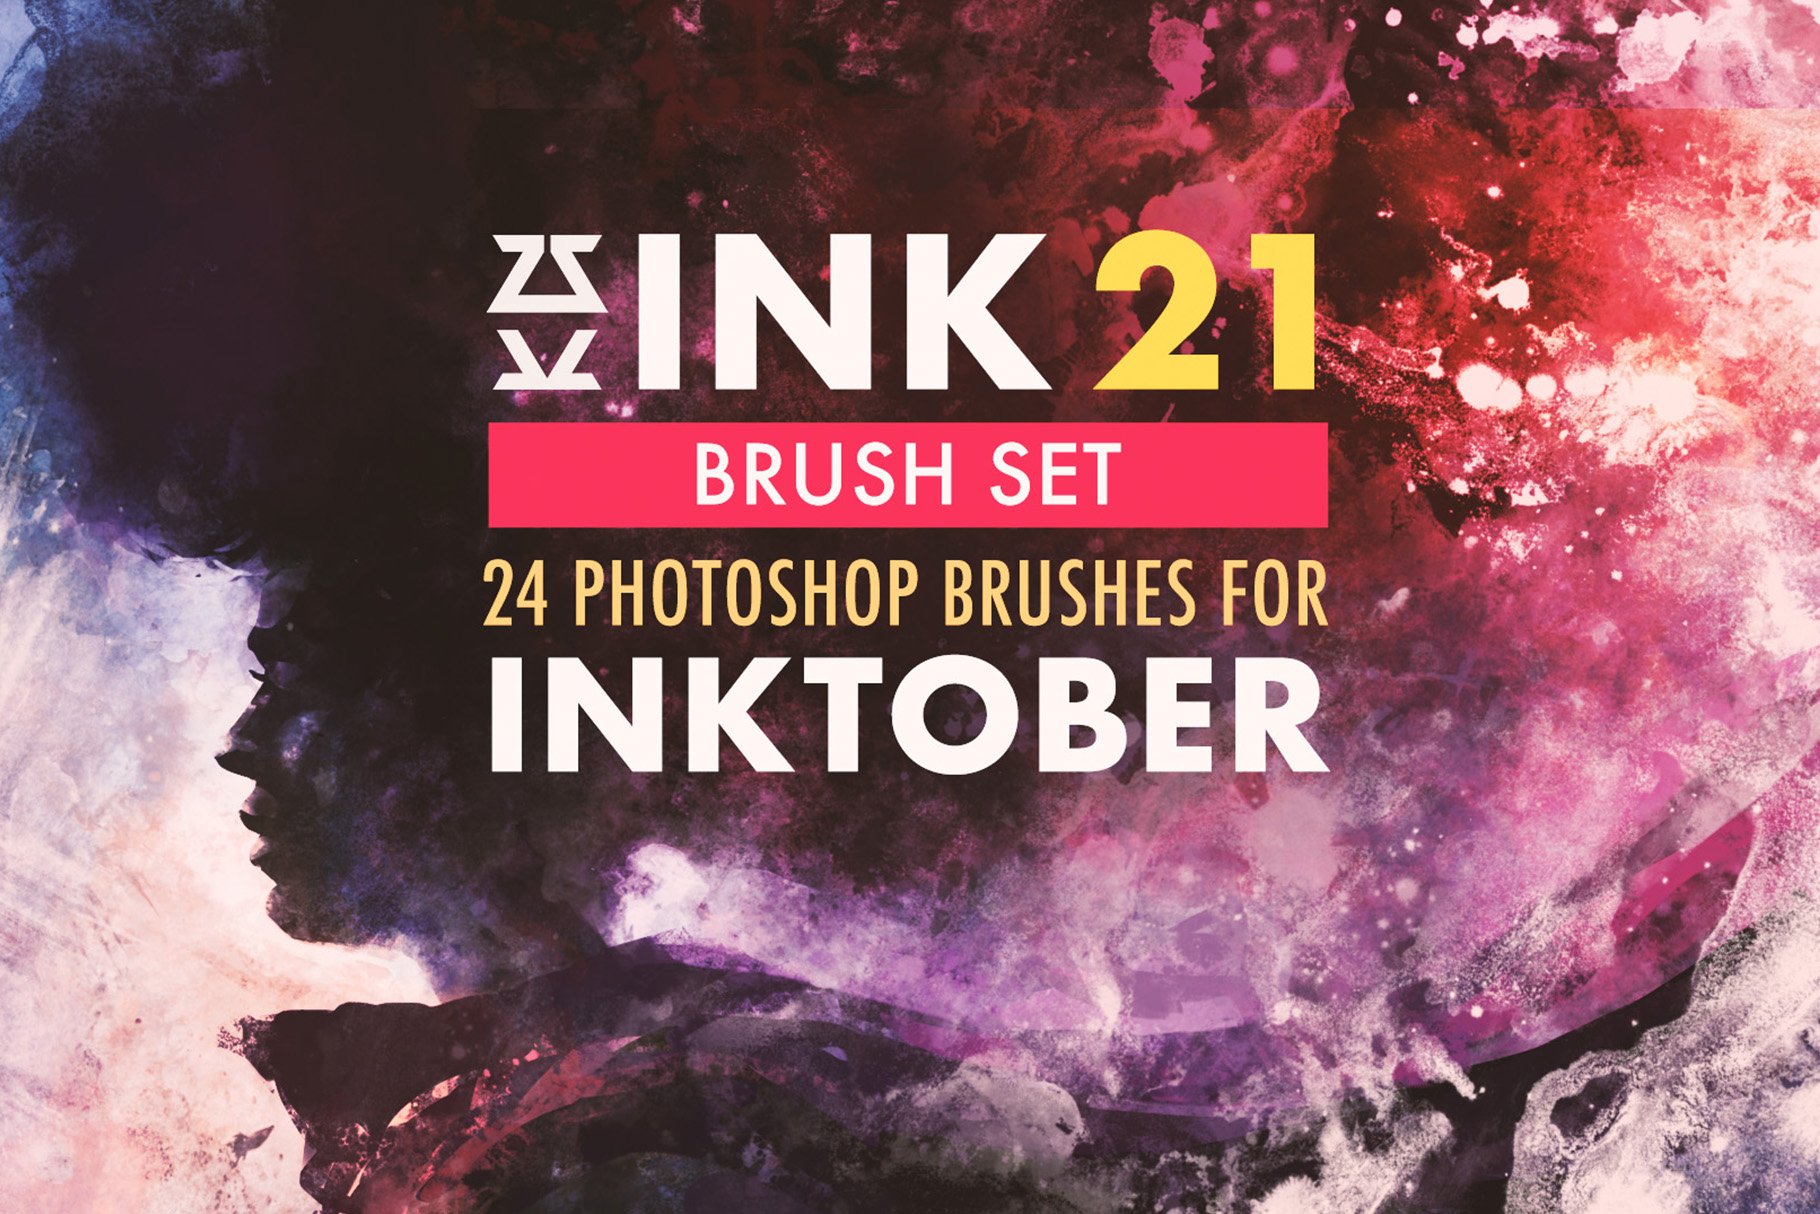 INK Brush Set for INKTOBER 2021cover image.